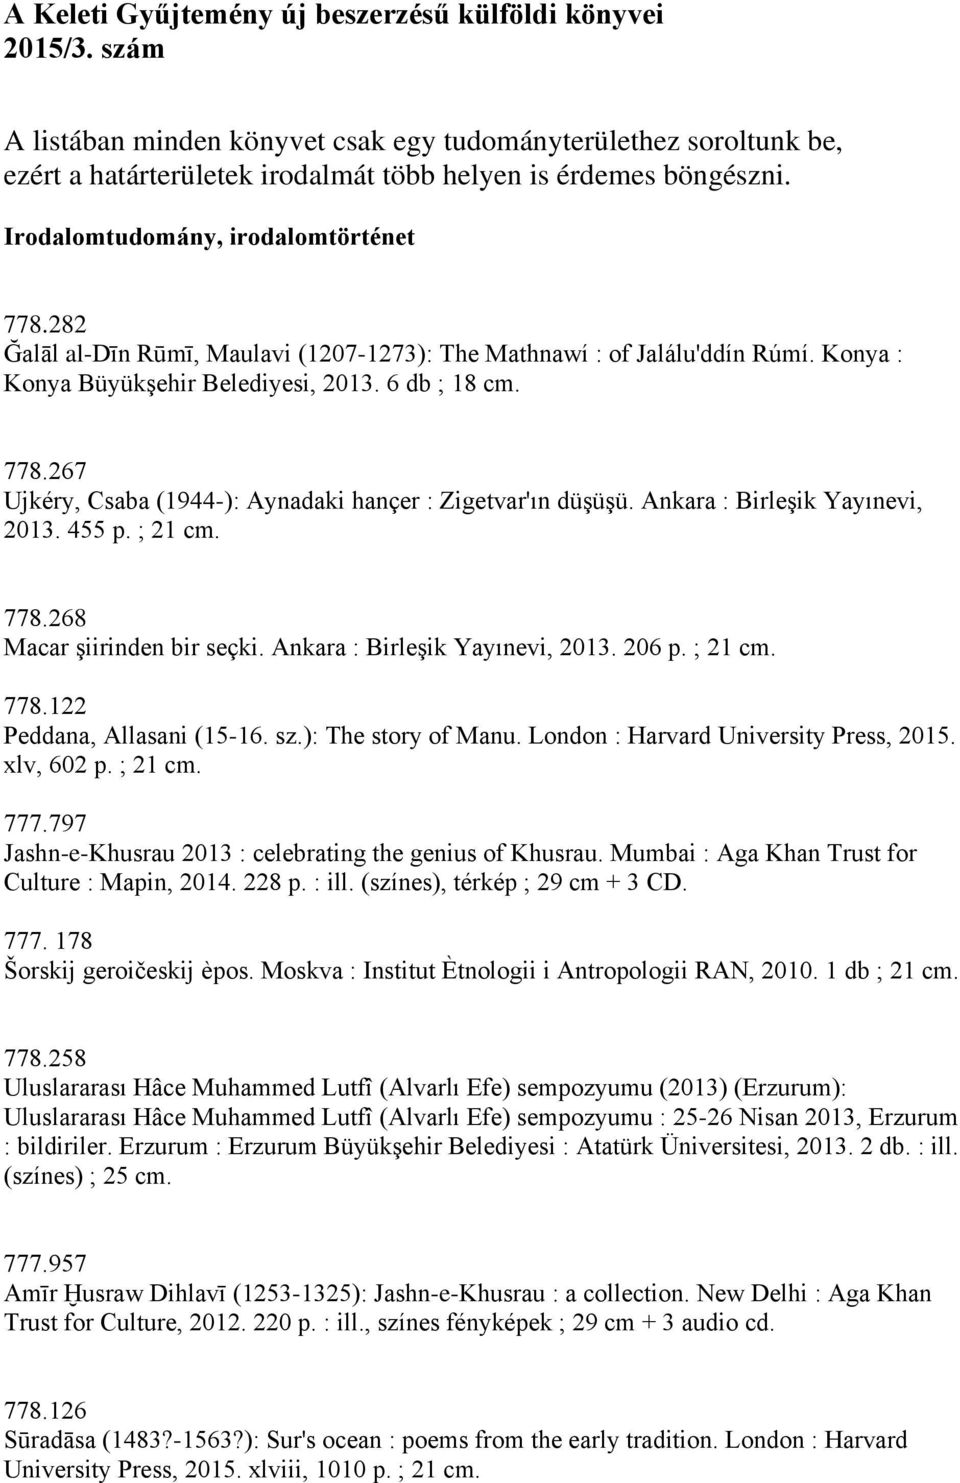 Ankara : Birleşik Yayınevi, 2013. 455 p. ; 21 cm. 778.268 Macar şiirinden bir seçki. Ankara : Birleşik Yayınevi, 2013. 206 p. ; 21 cm. 778.122 Peddana, Allasani (15-16. sz.): The story of Manu.